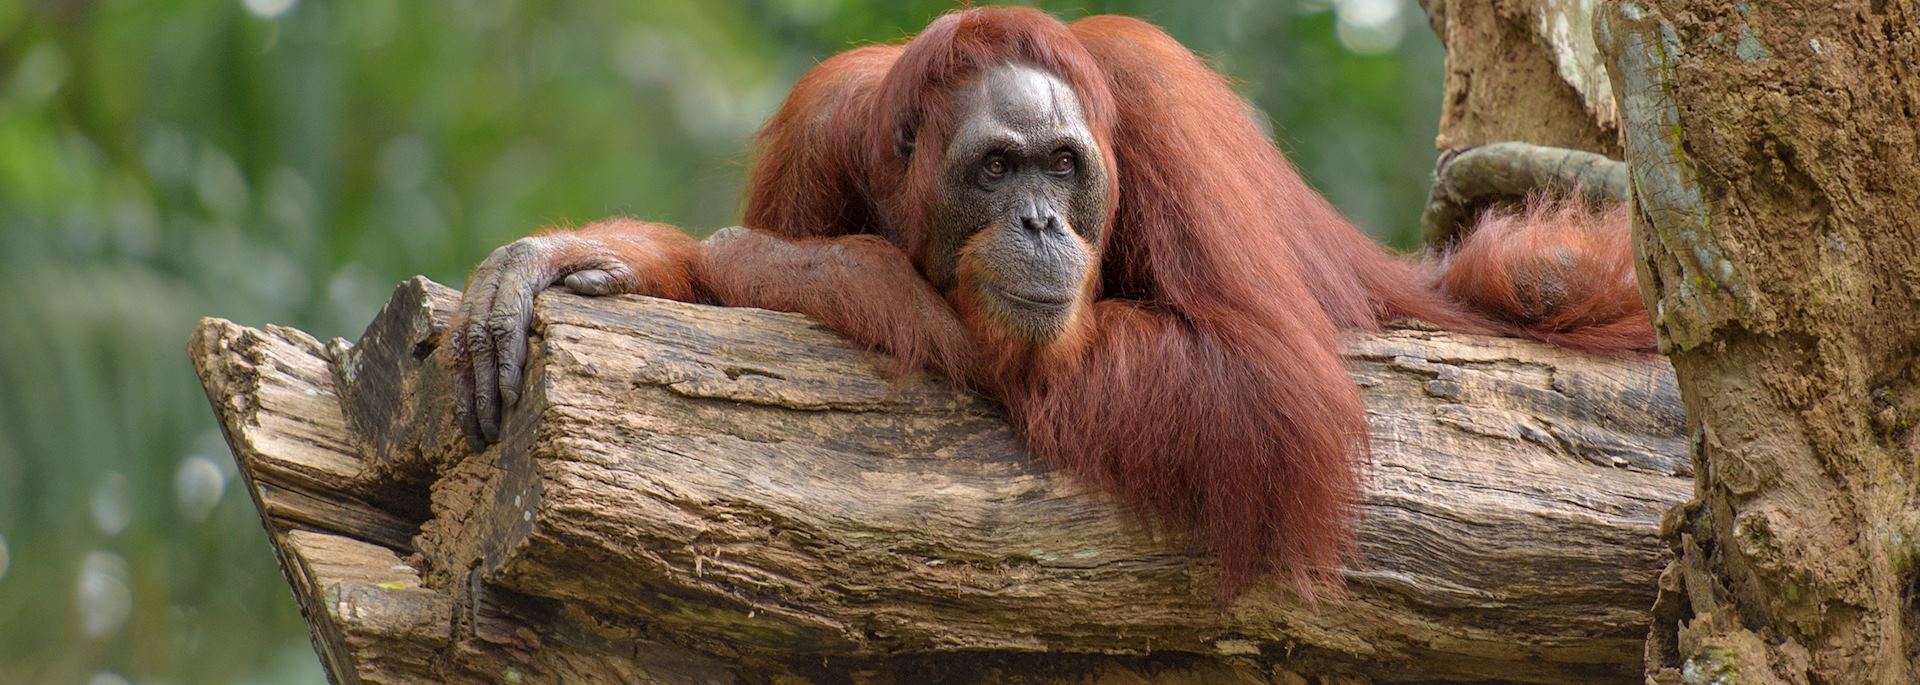 Male orangutan in the Tabin Wildlife Reserve